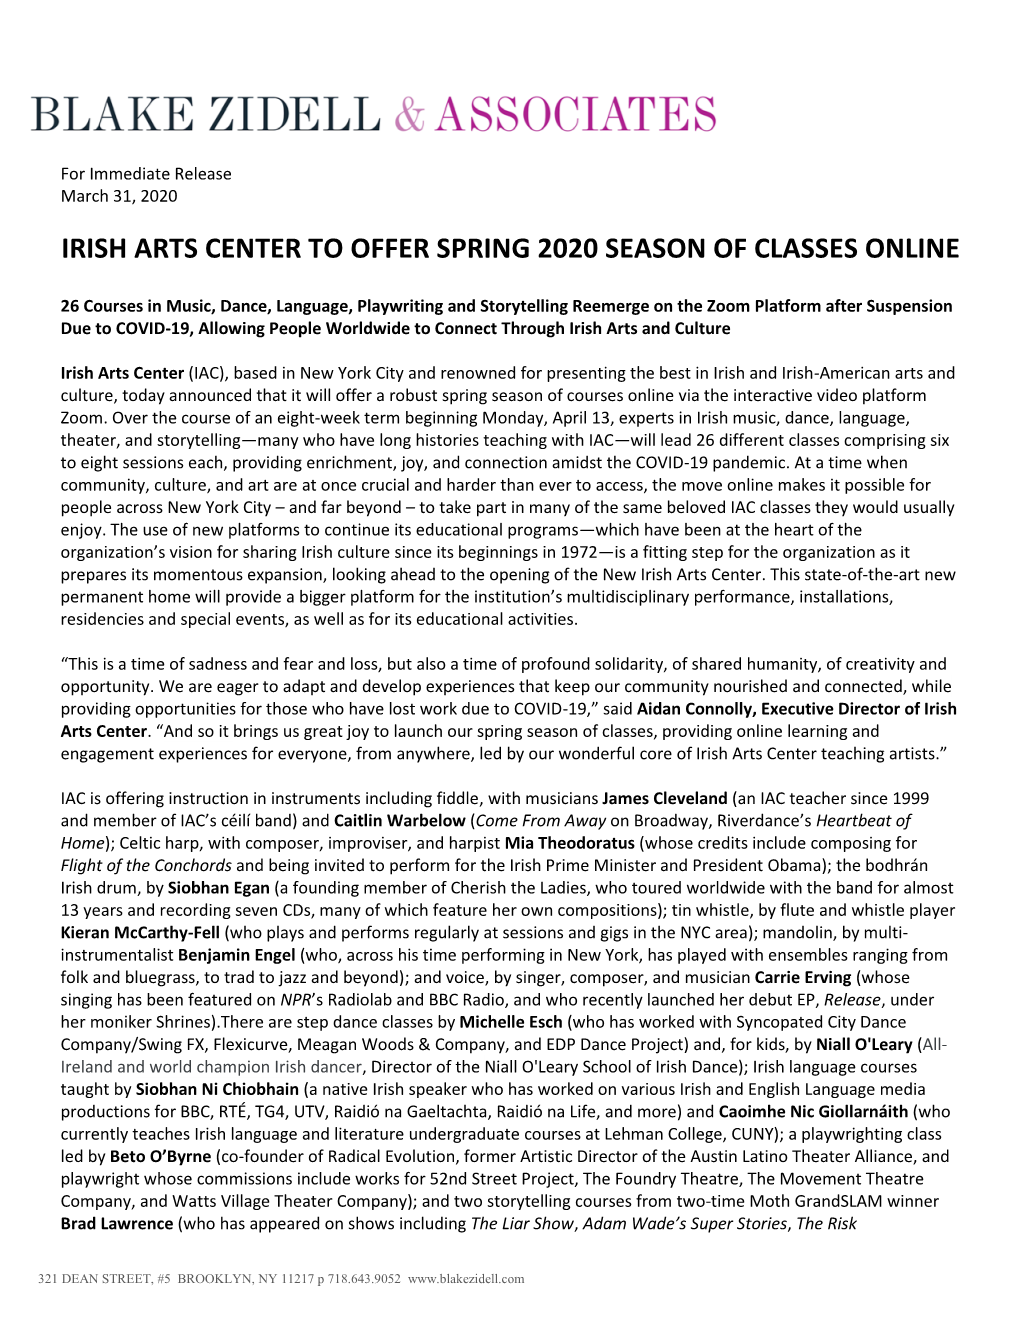 Irish Arts Center to Offer Spring 2020 Season of Classes Online